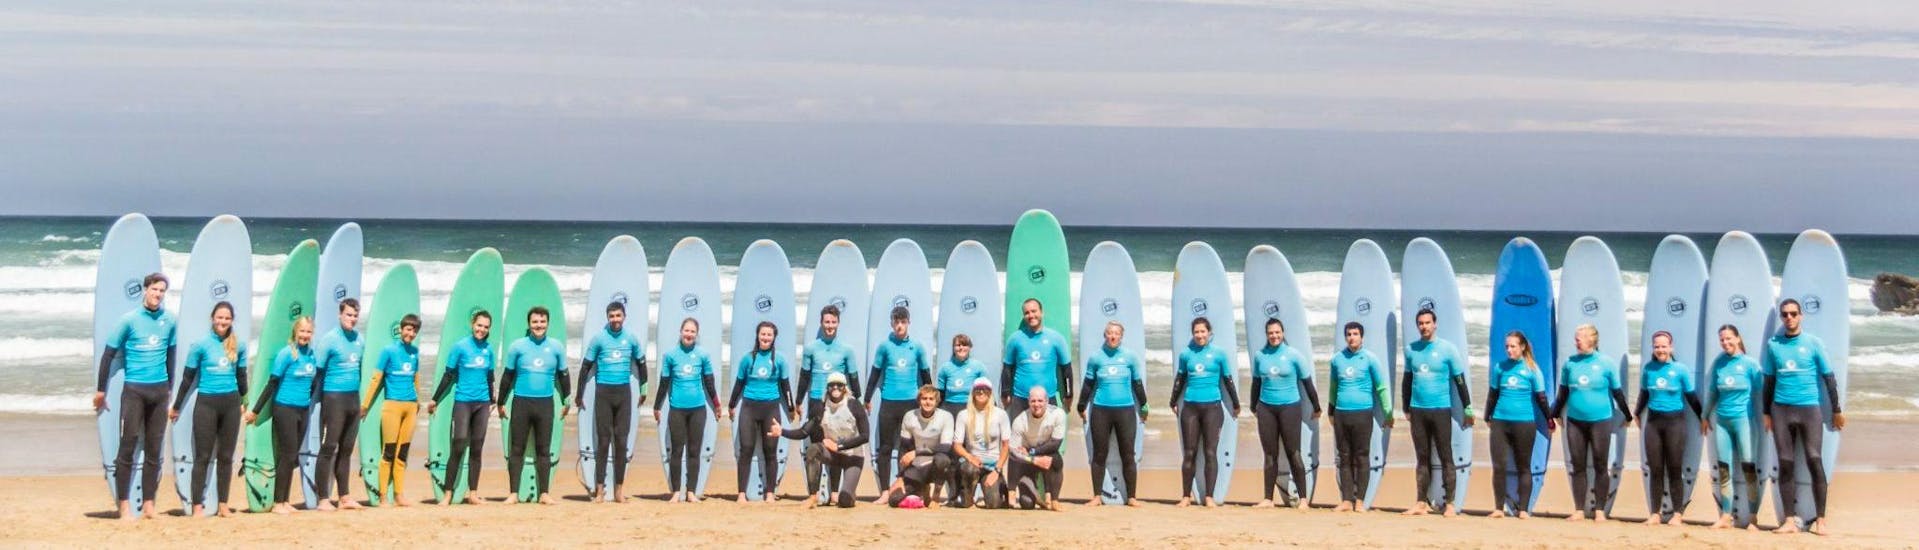 Lezioni di surf a Sagres da 8 anni per tutti i livelli.